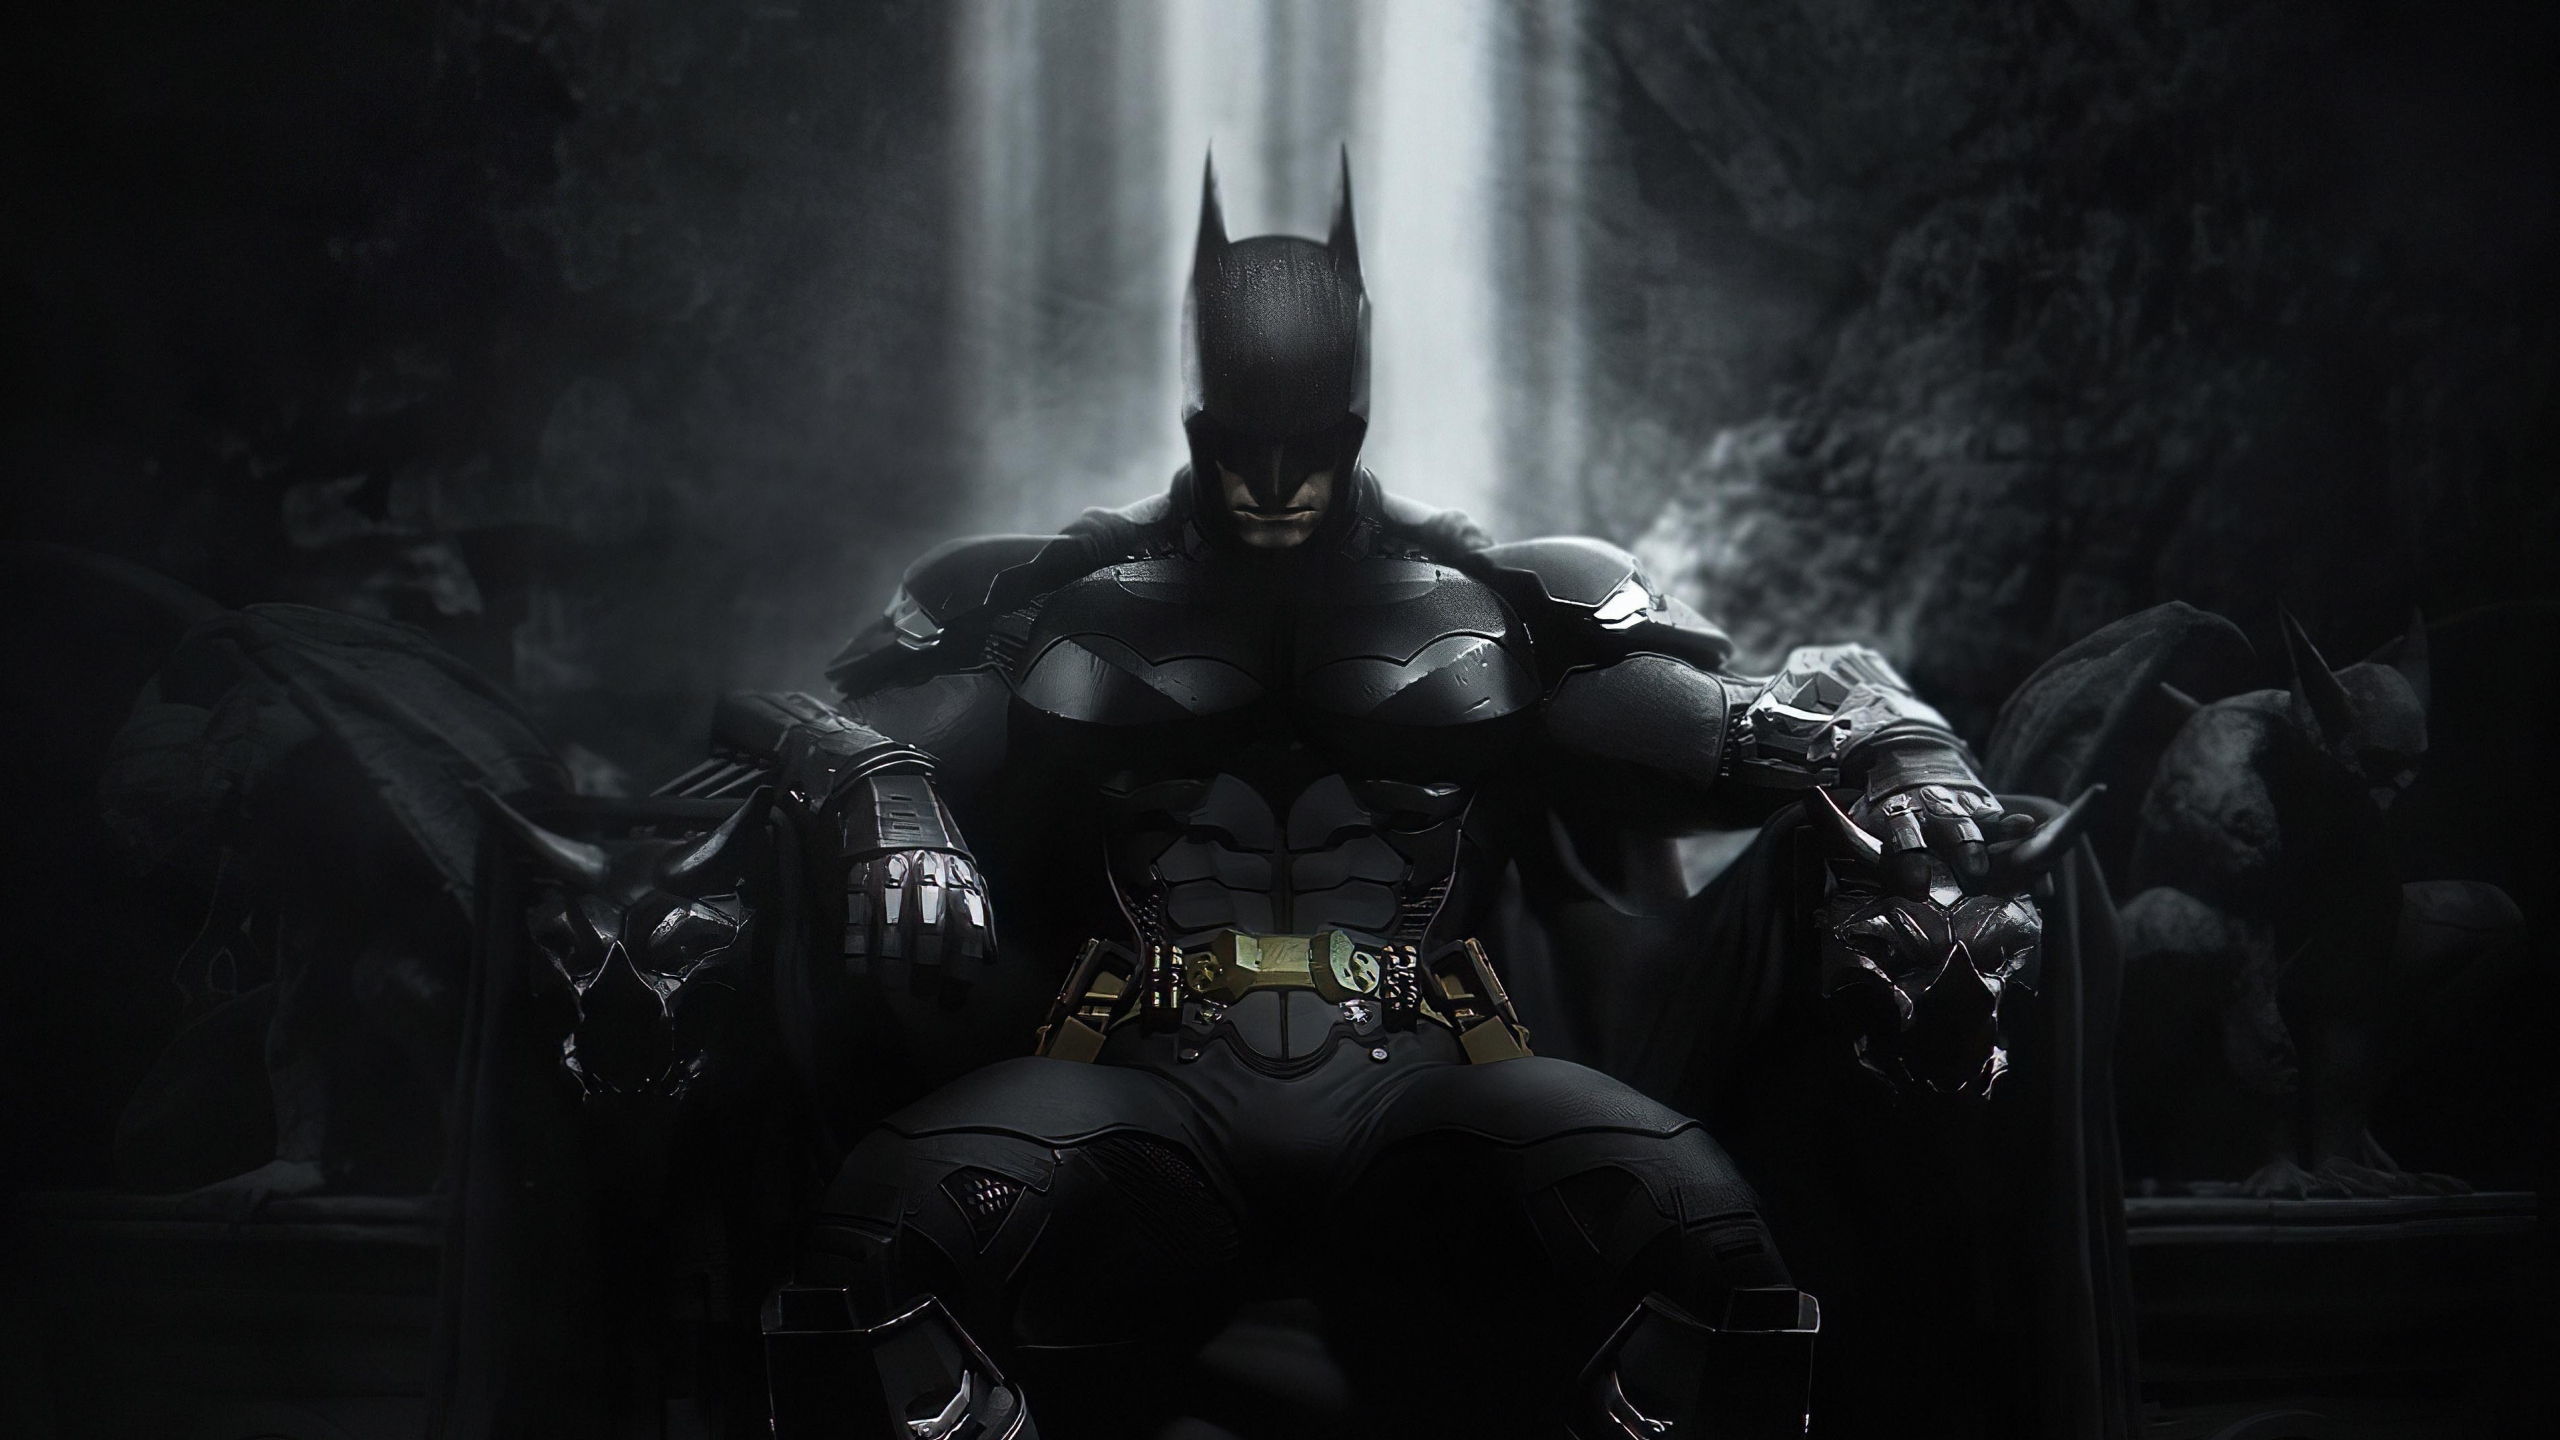 Download wallpaper 2560x1440 batman, sitting on throne, dark, superhero  art, dual wide 16:9 2560x1440 hd background, 26351